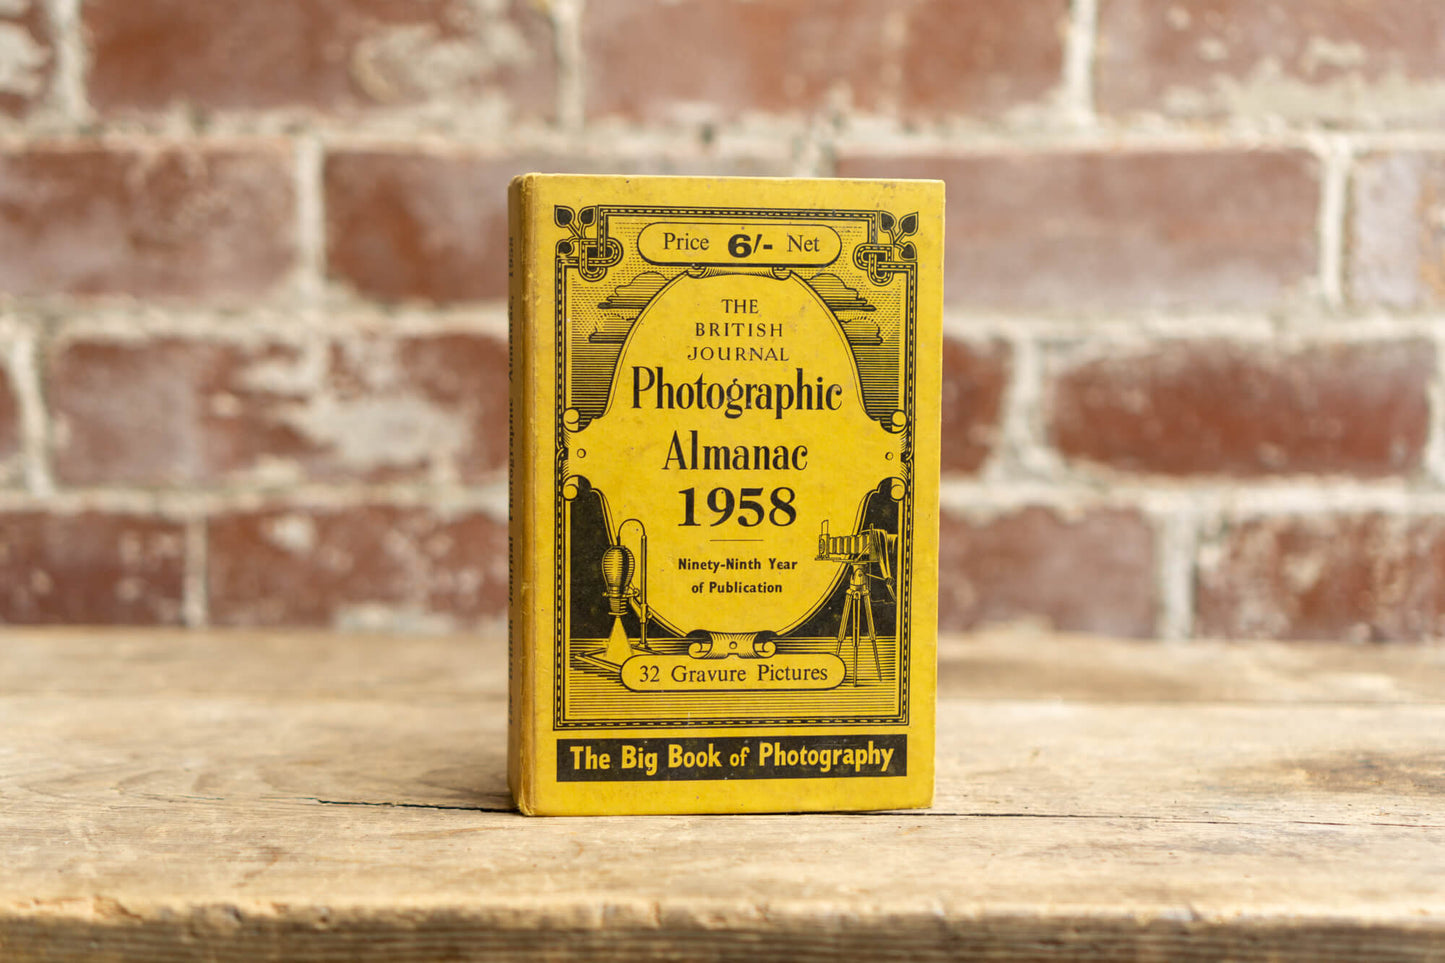 'The British Journal' Photographic Almanac Books